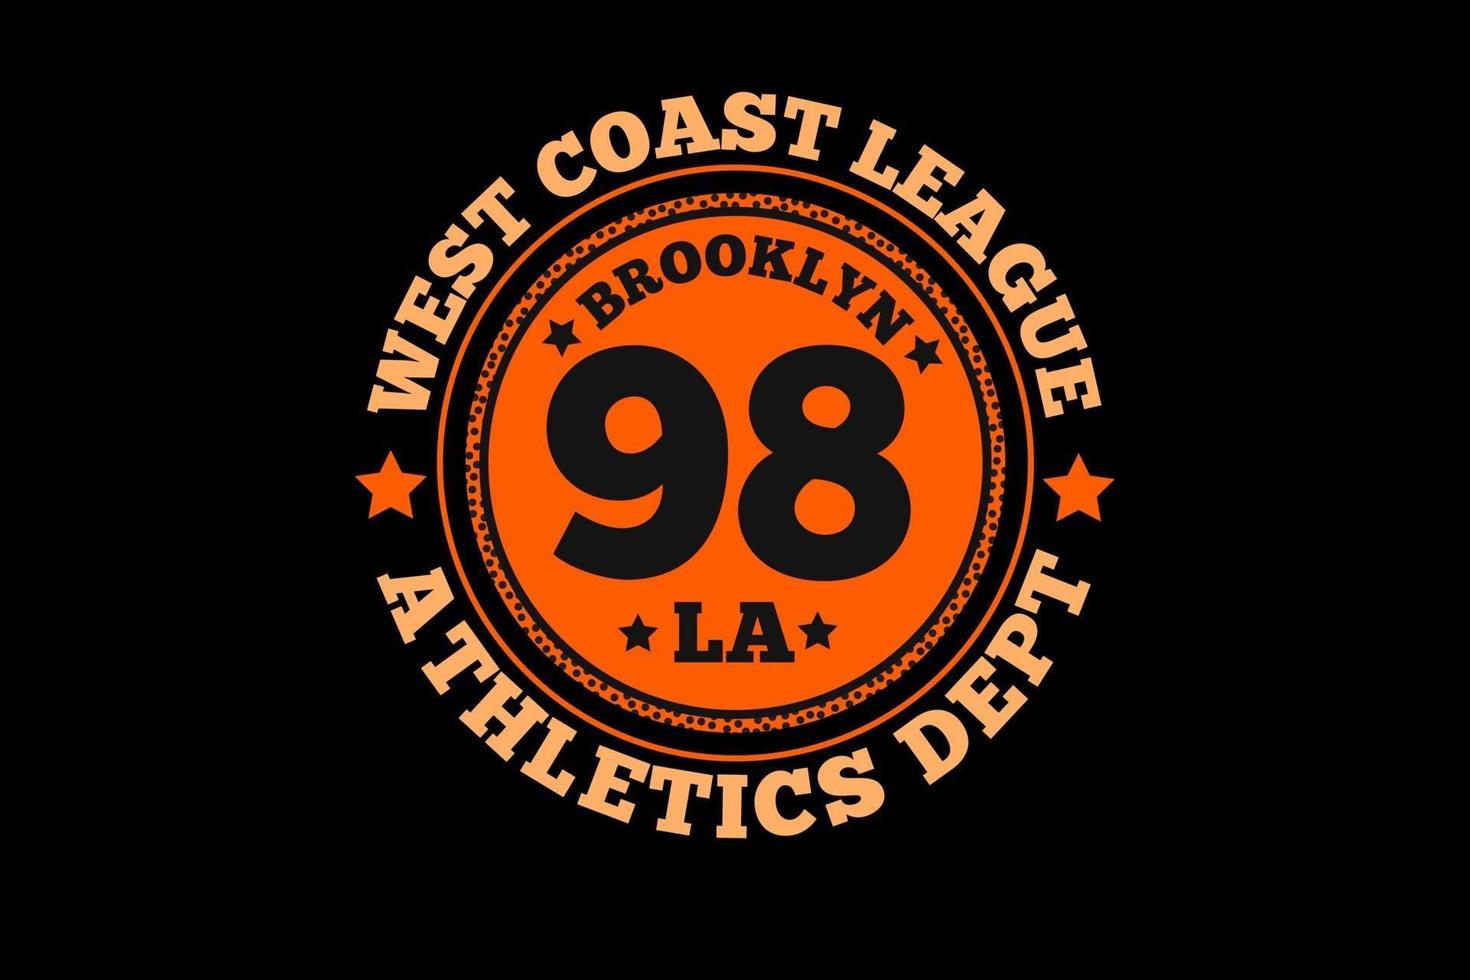 west coast league brooklyn typografie vector